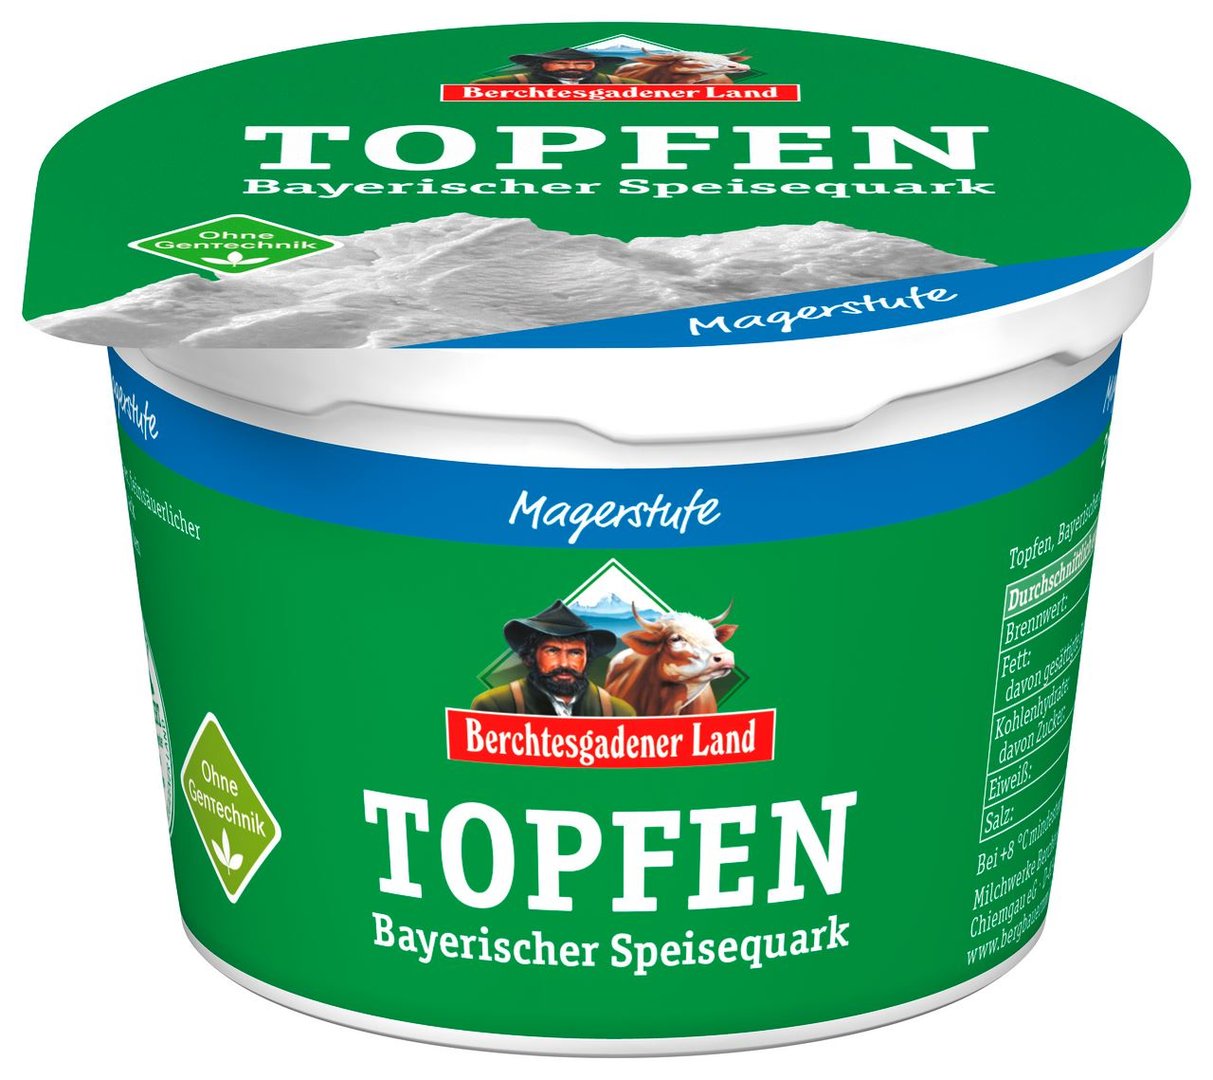 Berchtesgadener Land - Topfenquark Mager 0,2 % Fett - 1 x 250 g Becher